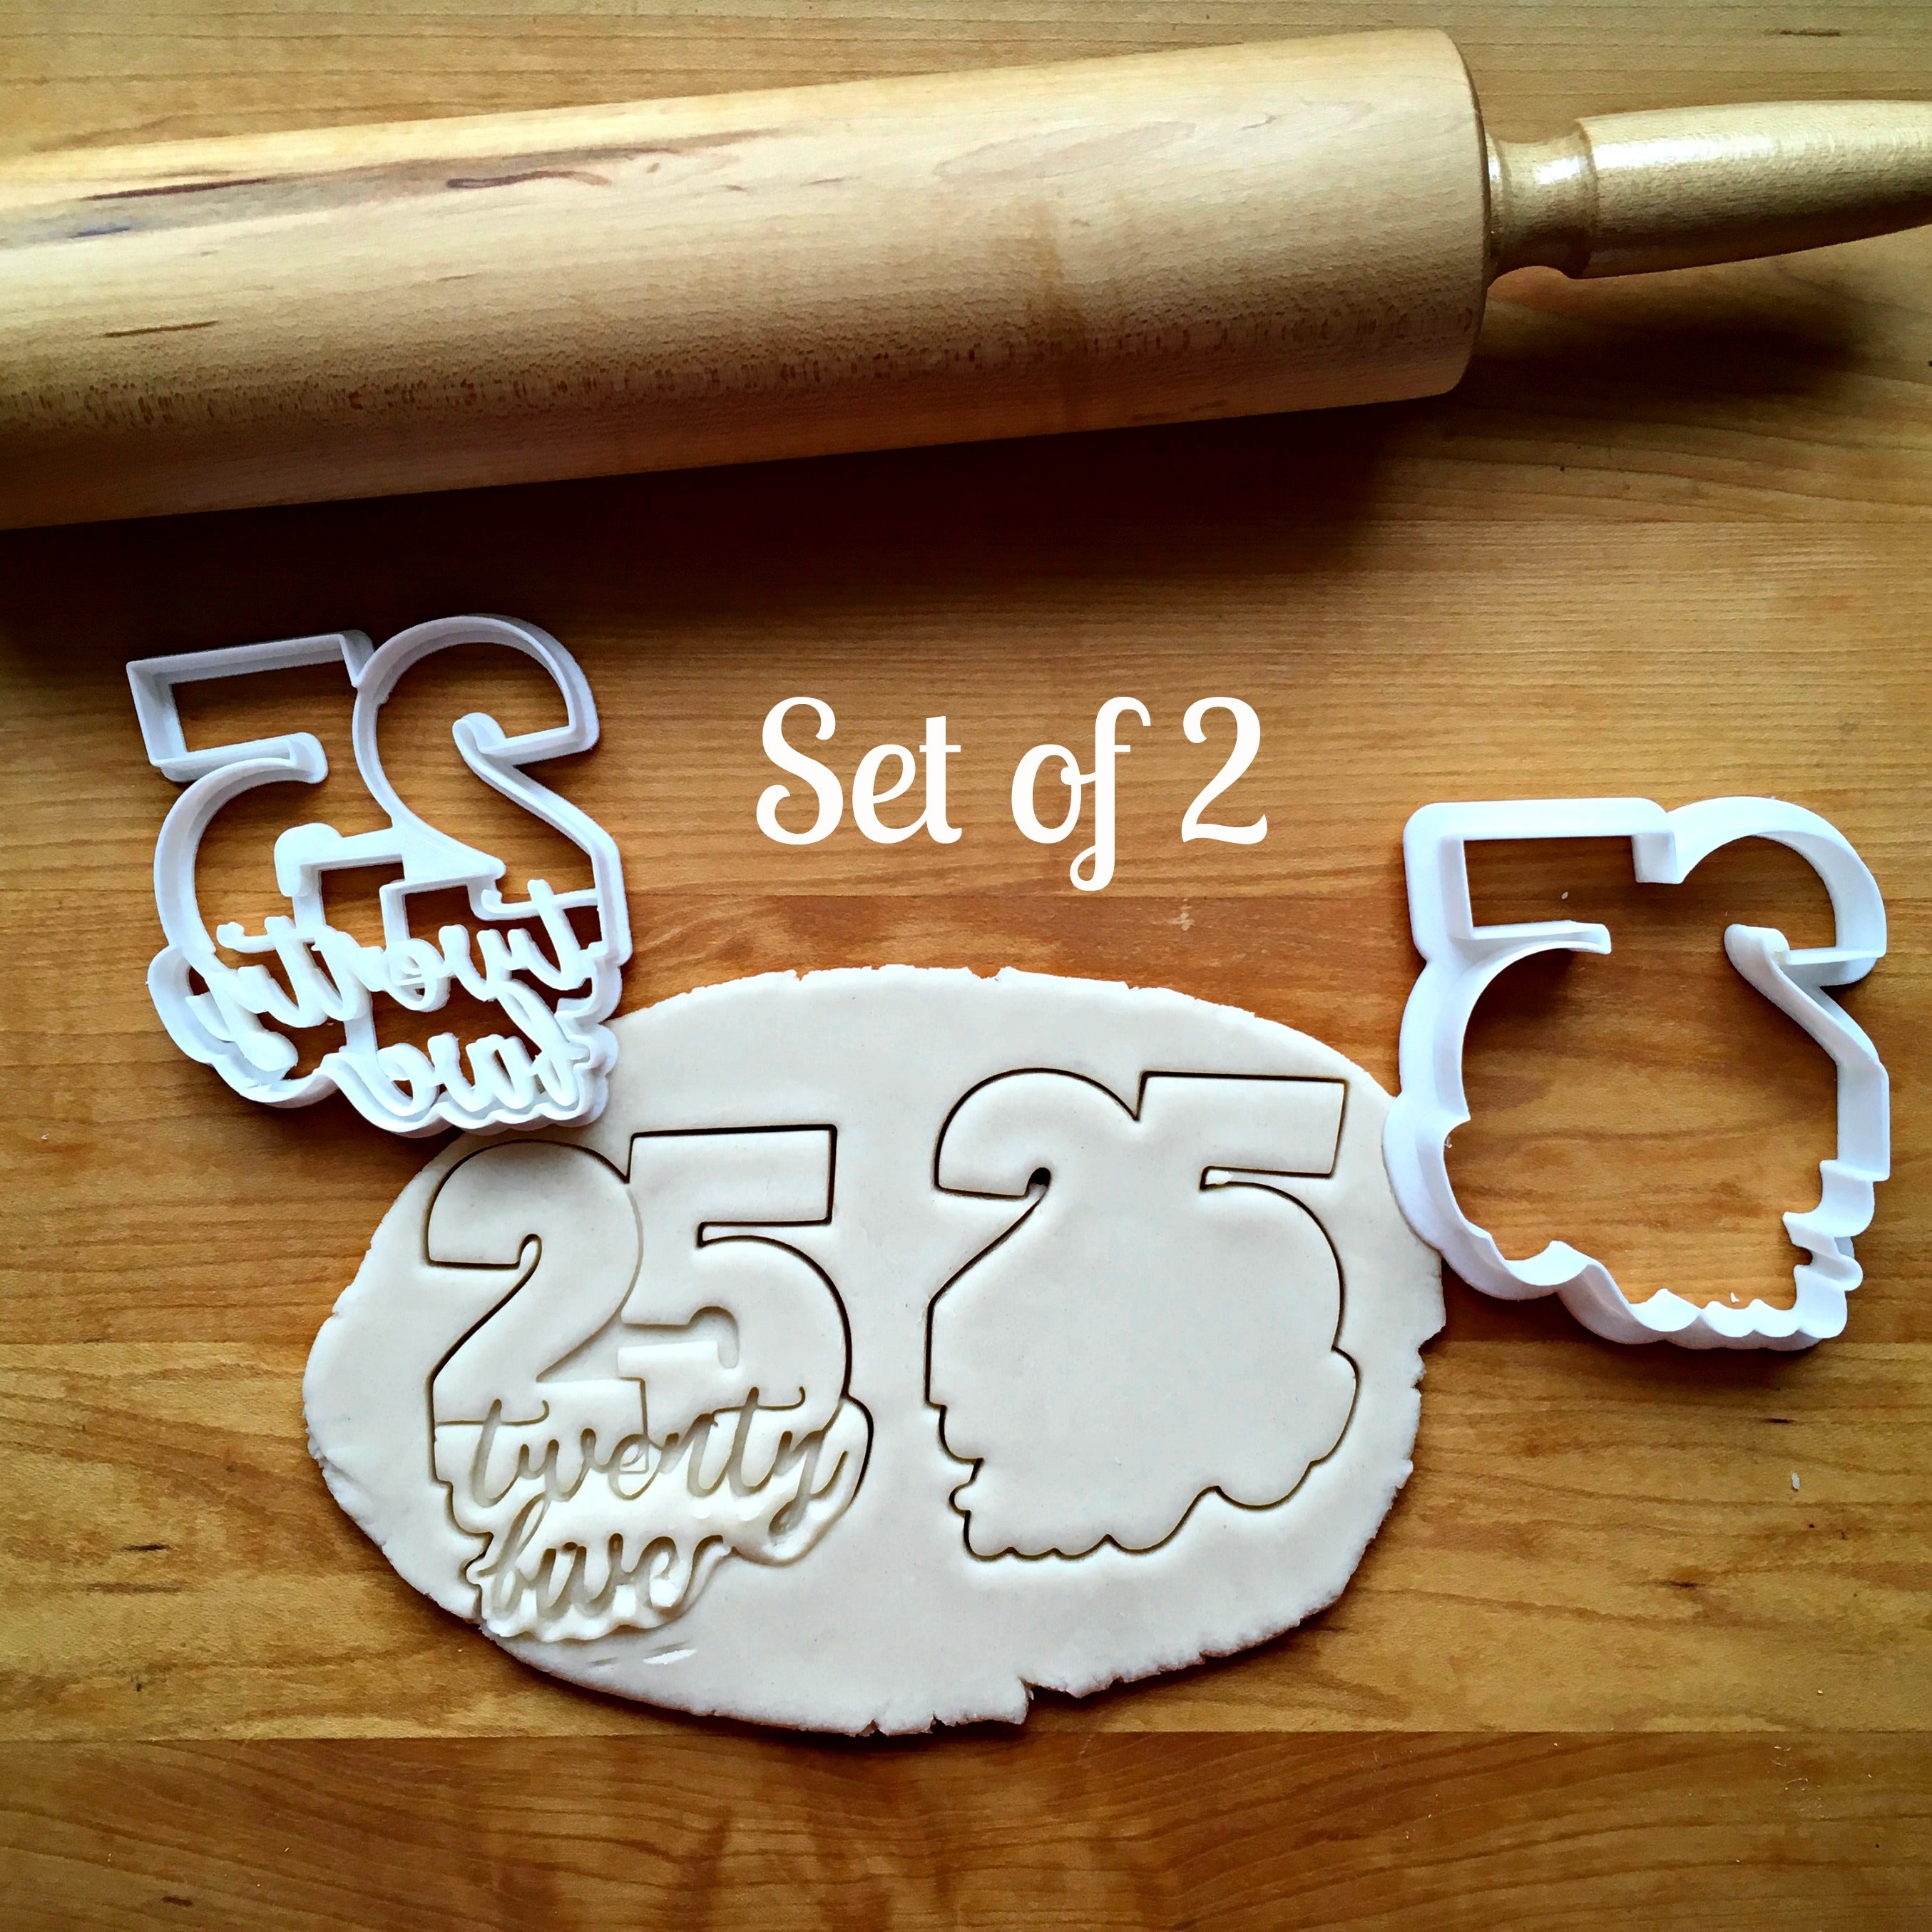 Set of 2 Lettered Number 25 Cookie Cutters/Dishwasher Safe